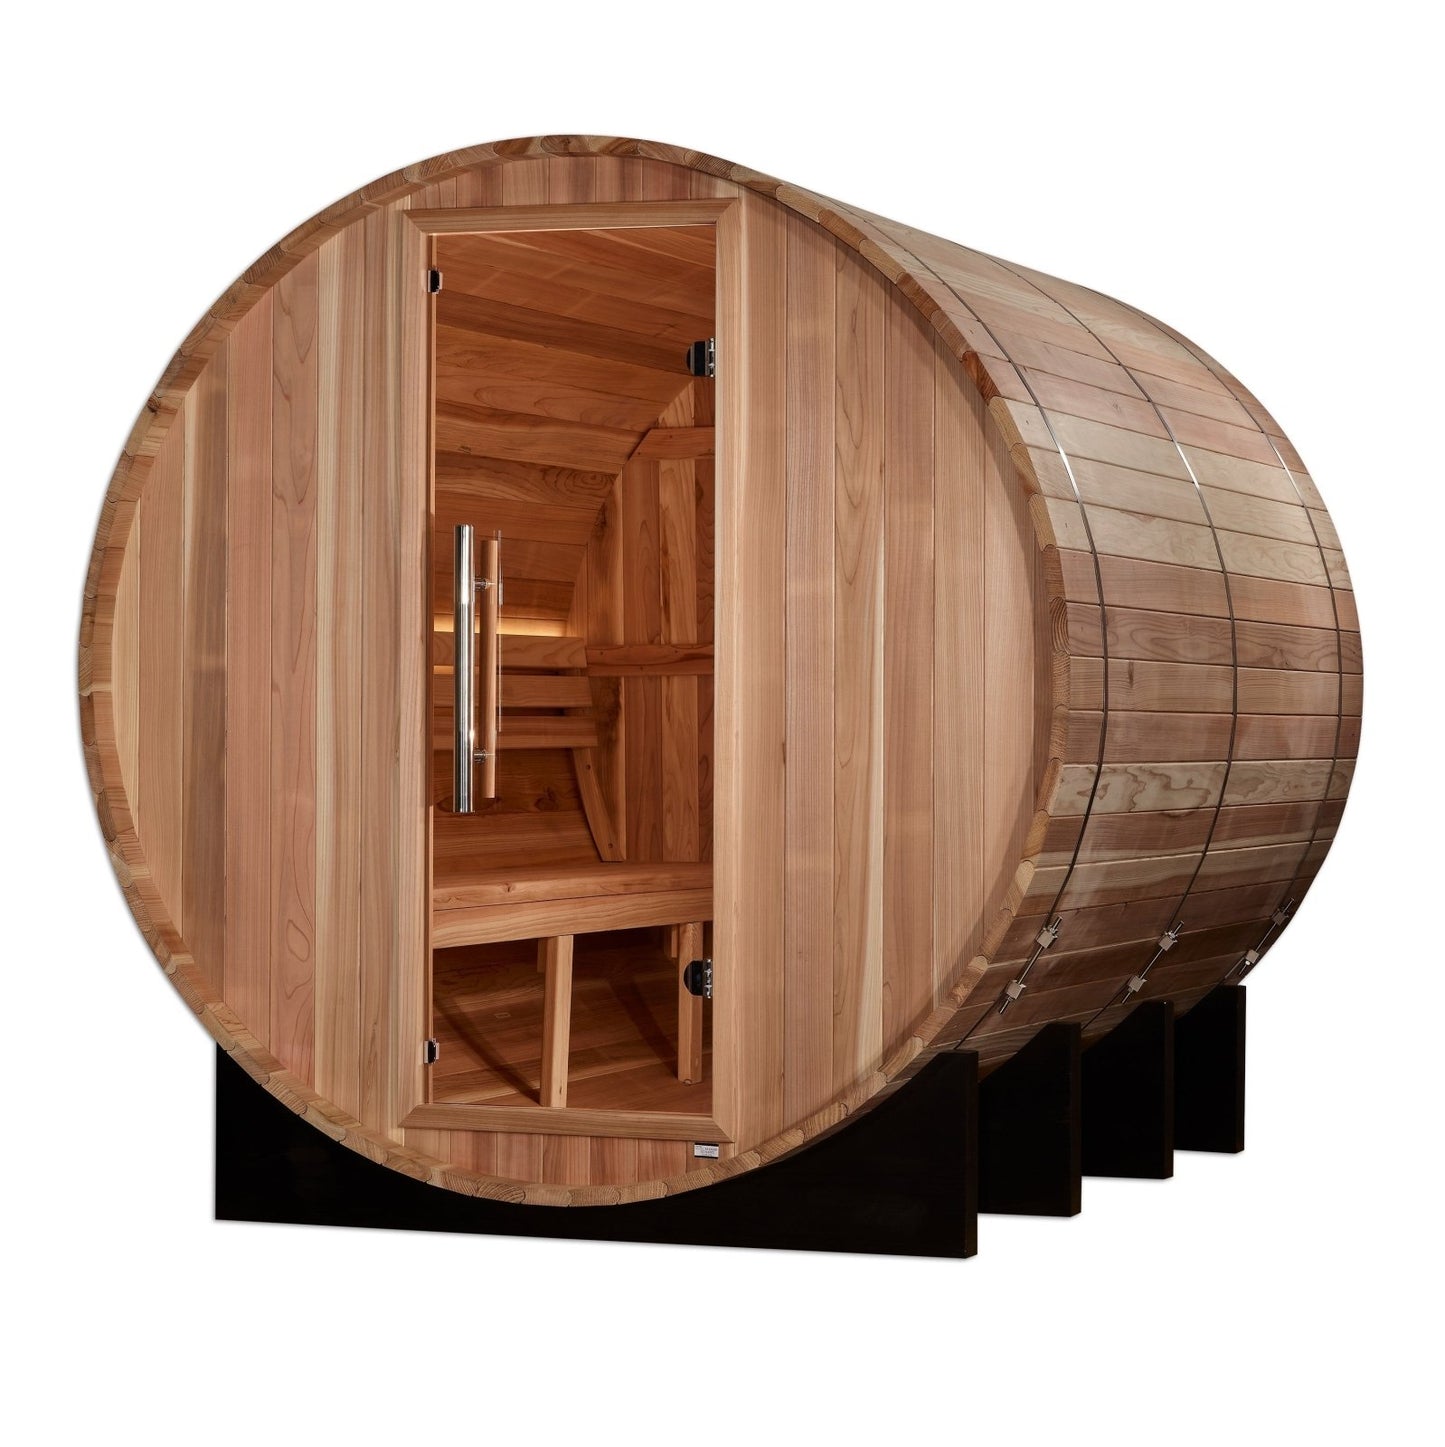 Golden Designs "Klosters" 6-Person Barrel Traditional Steam Sauna - Pacific Cedar - GDI-B006-01